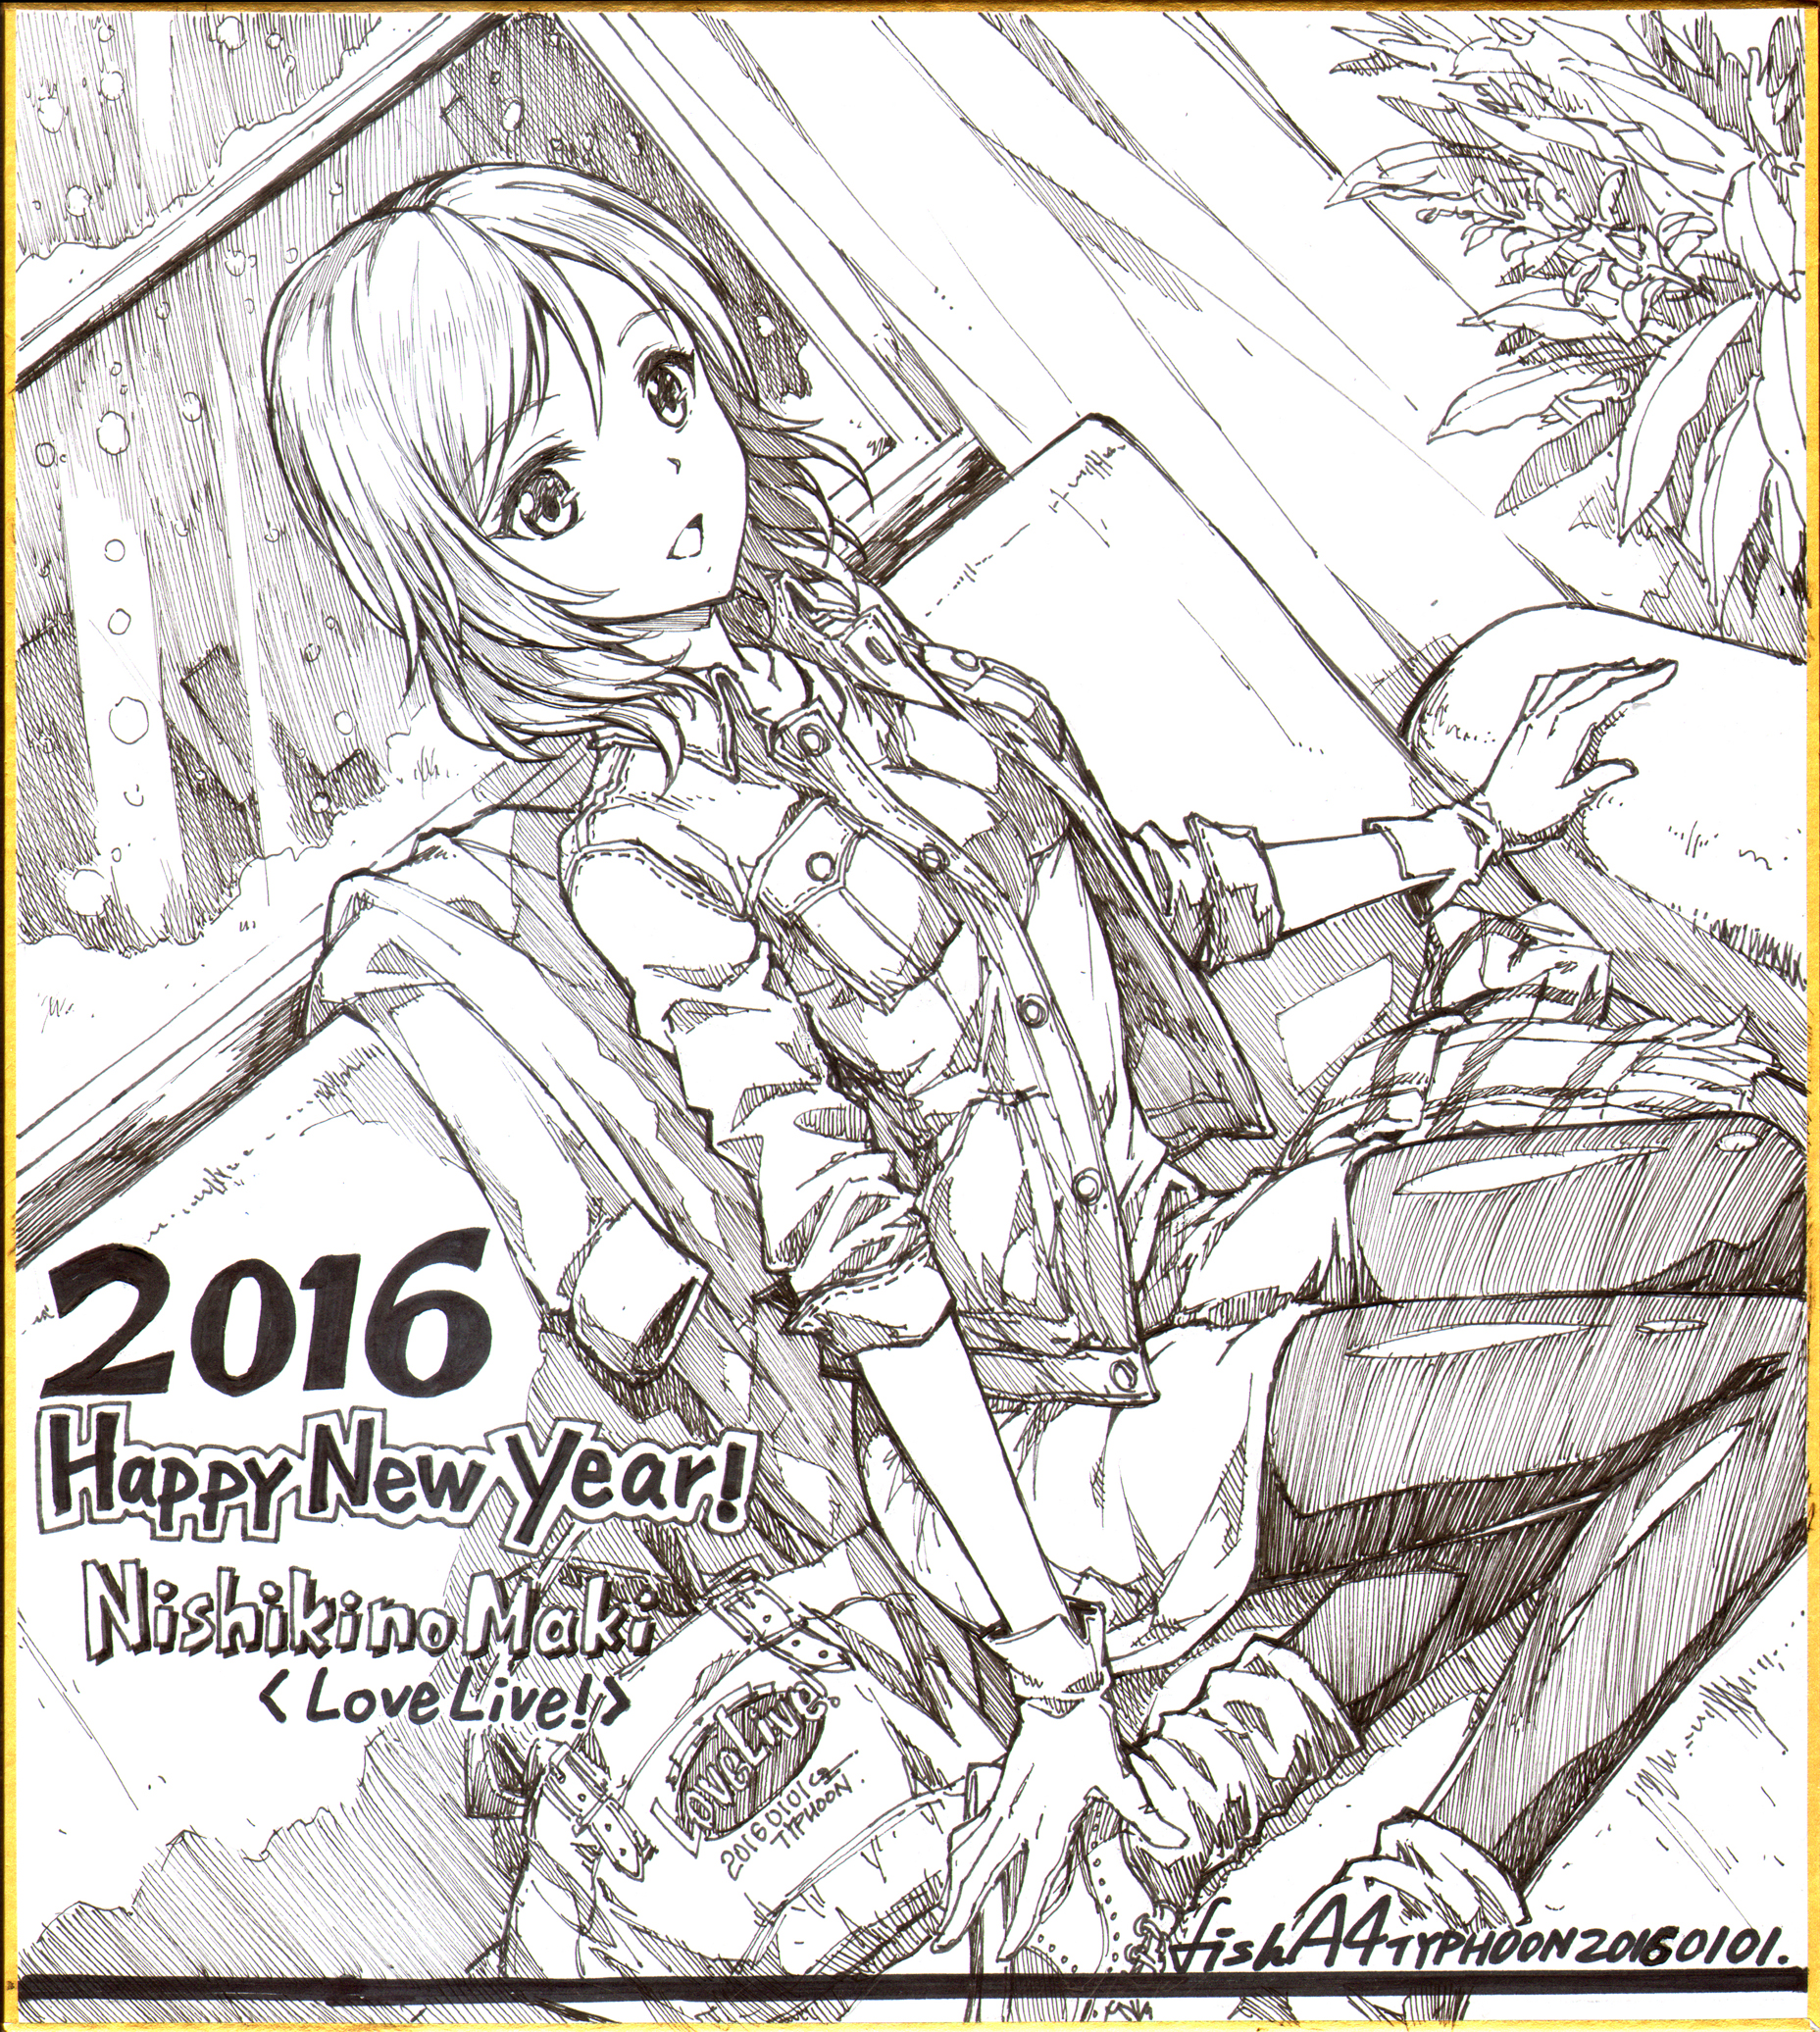 2016 HAPPY NEW YEAR!插画图片壁纸